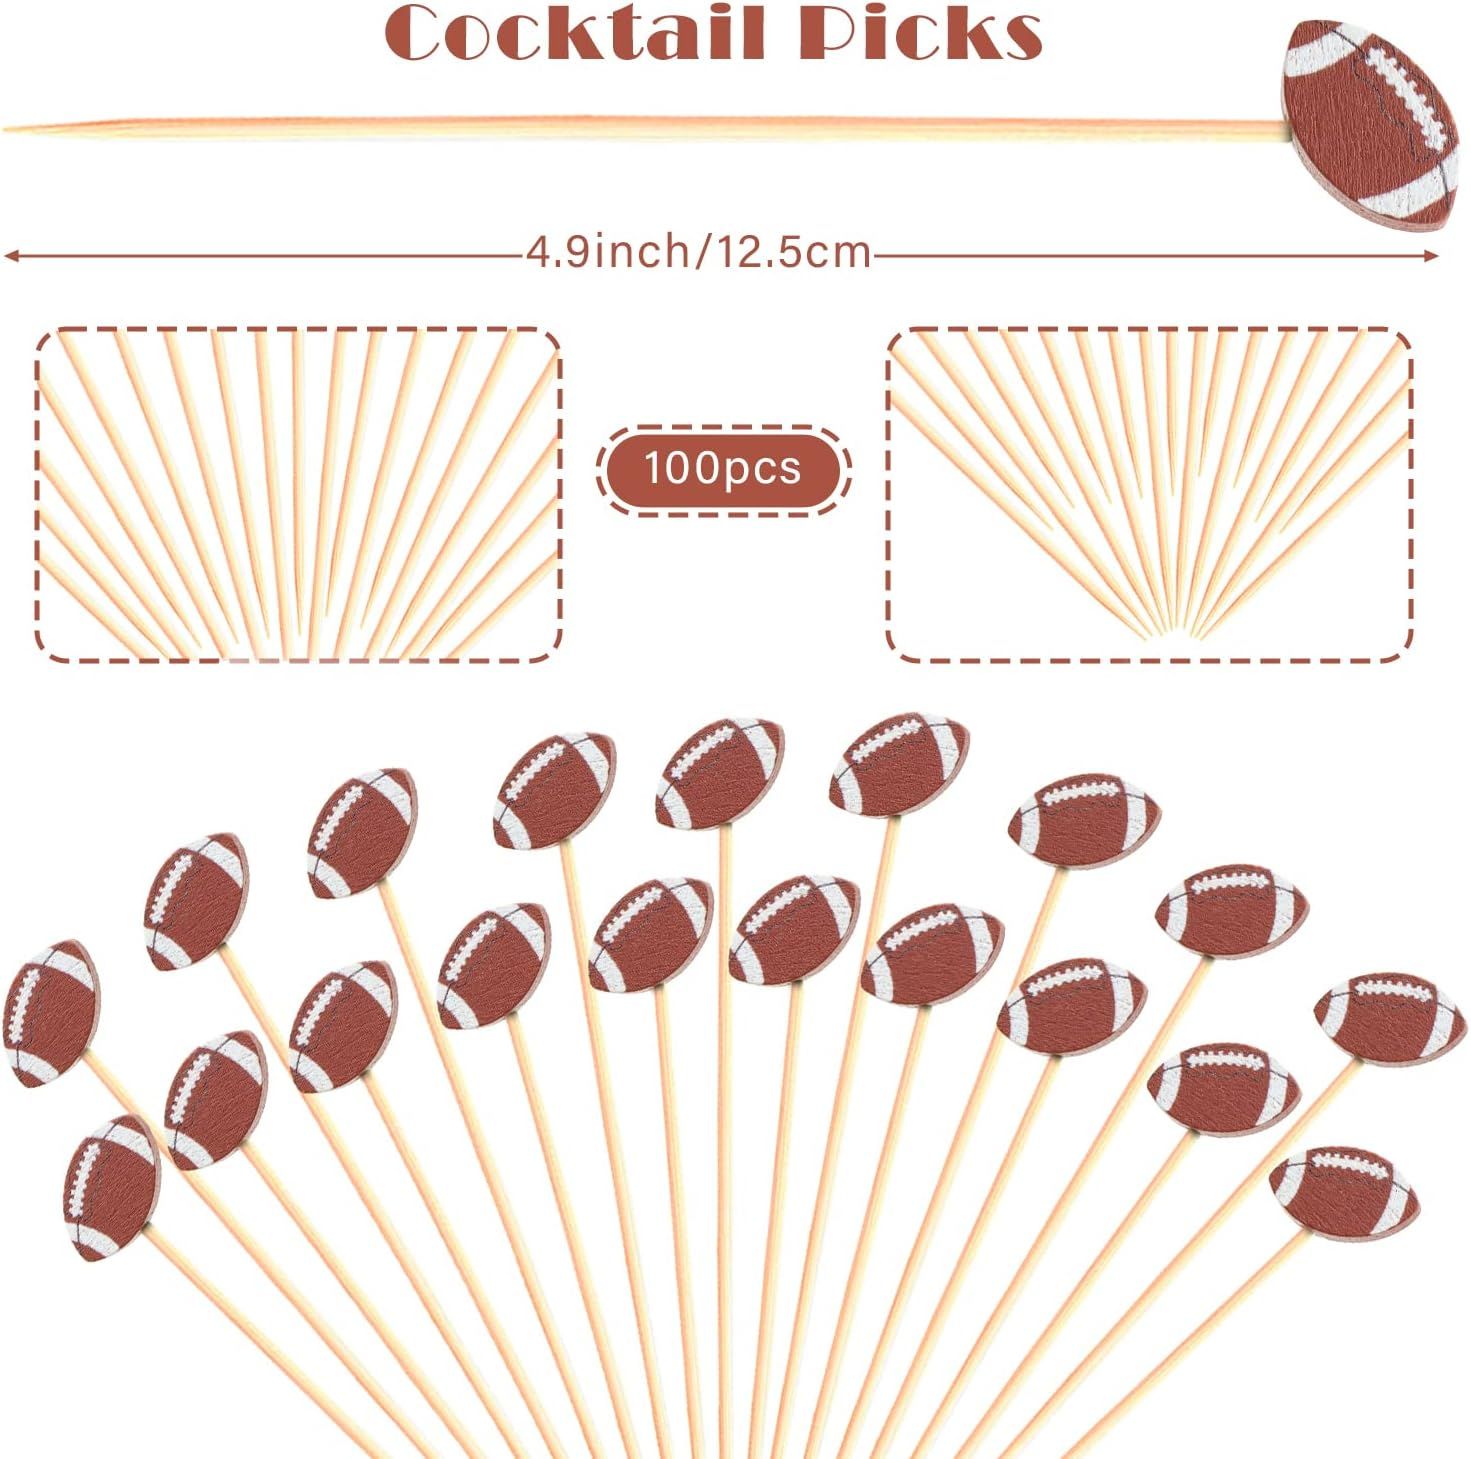 Crafterlife 100pcs Football Cocktail Picks Decorative Toothpicks Fruit Sandwich Skewers Dessert S... | Amazon (US)